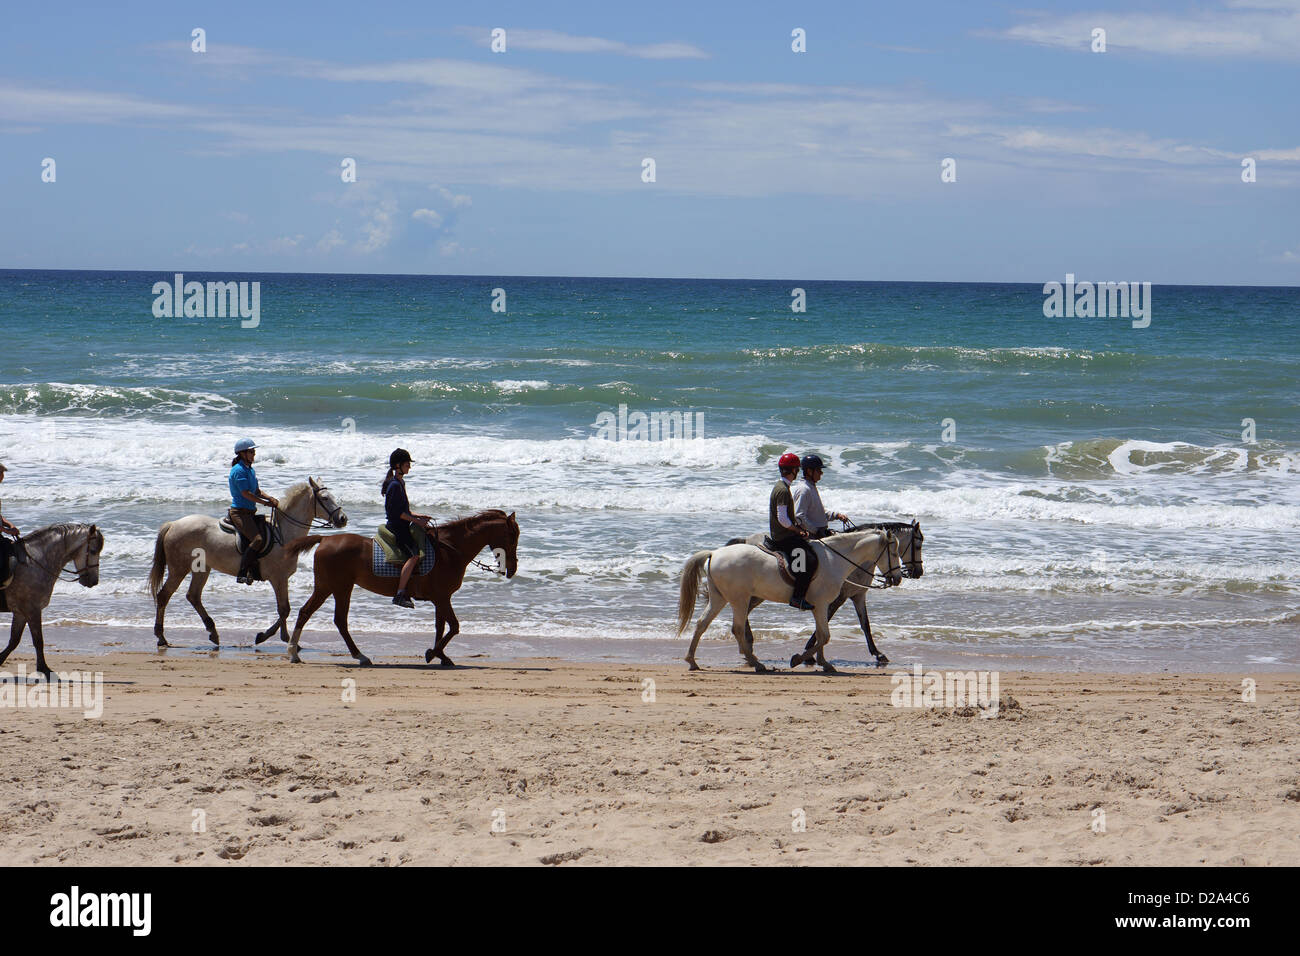 Zahara atunes cadix andalousie espagne horse beach Banque D'Images